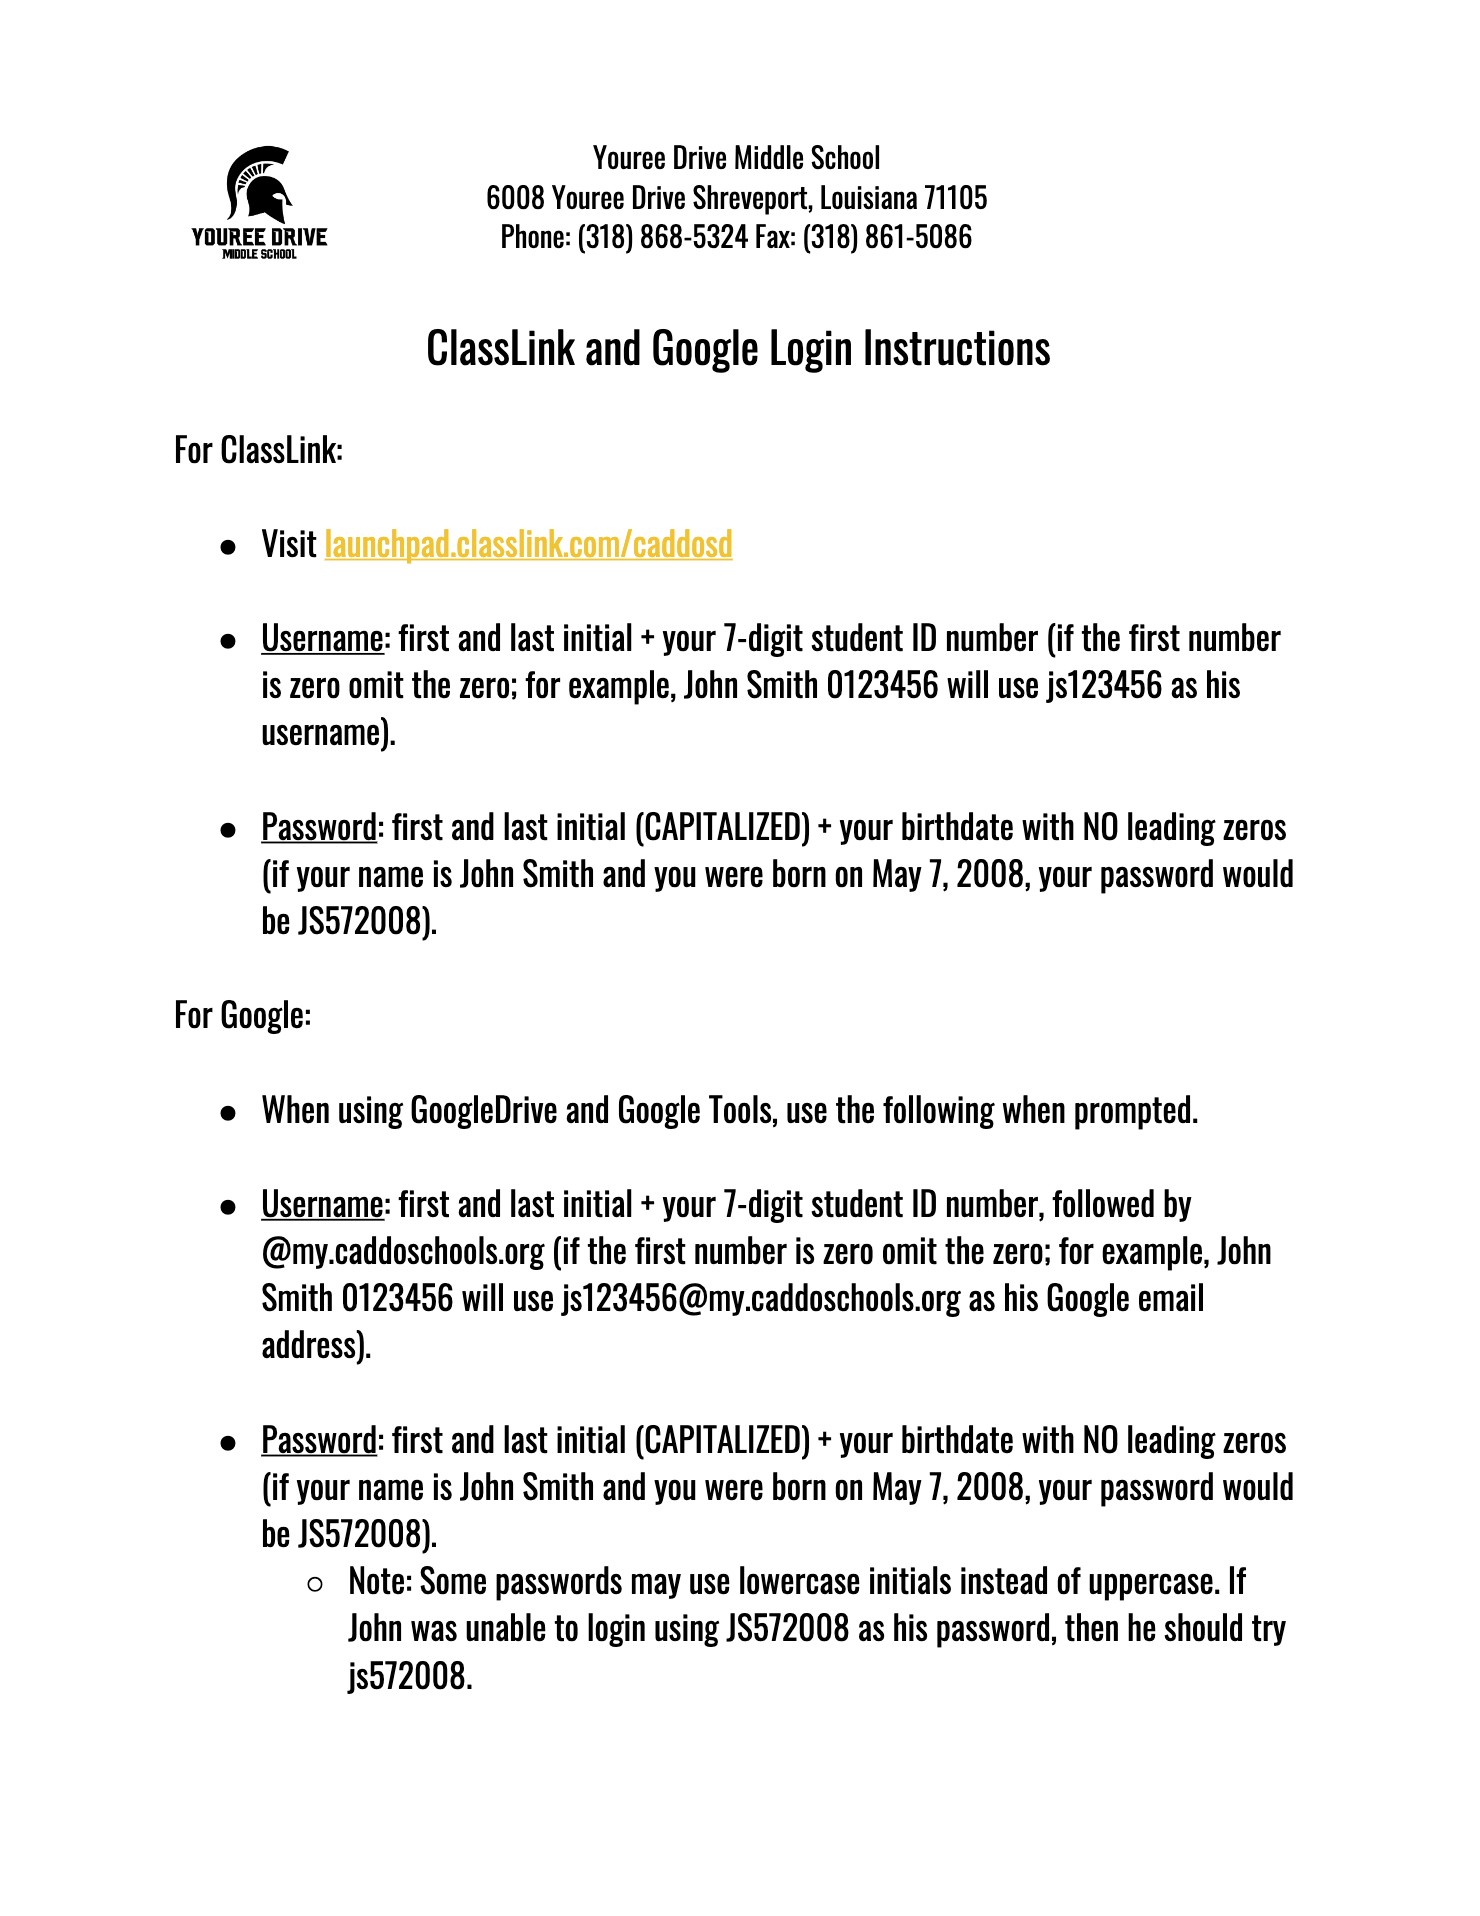 Classlink & Google Login Instructions